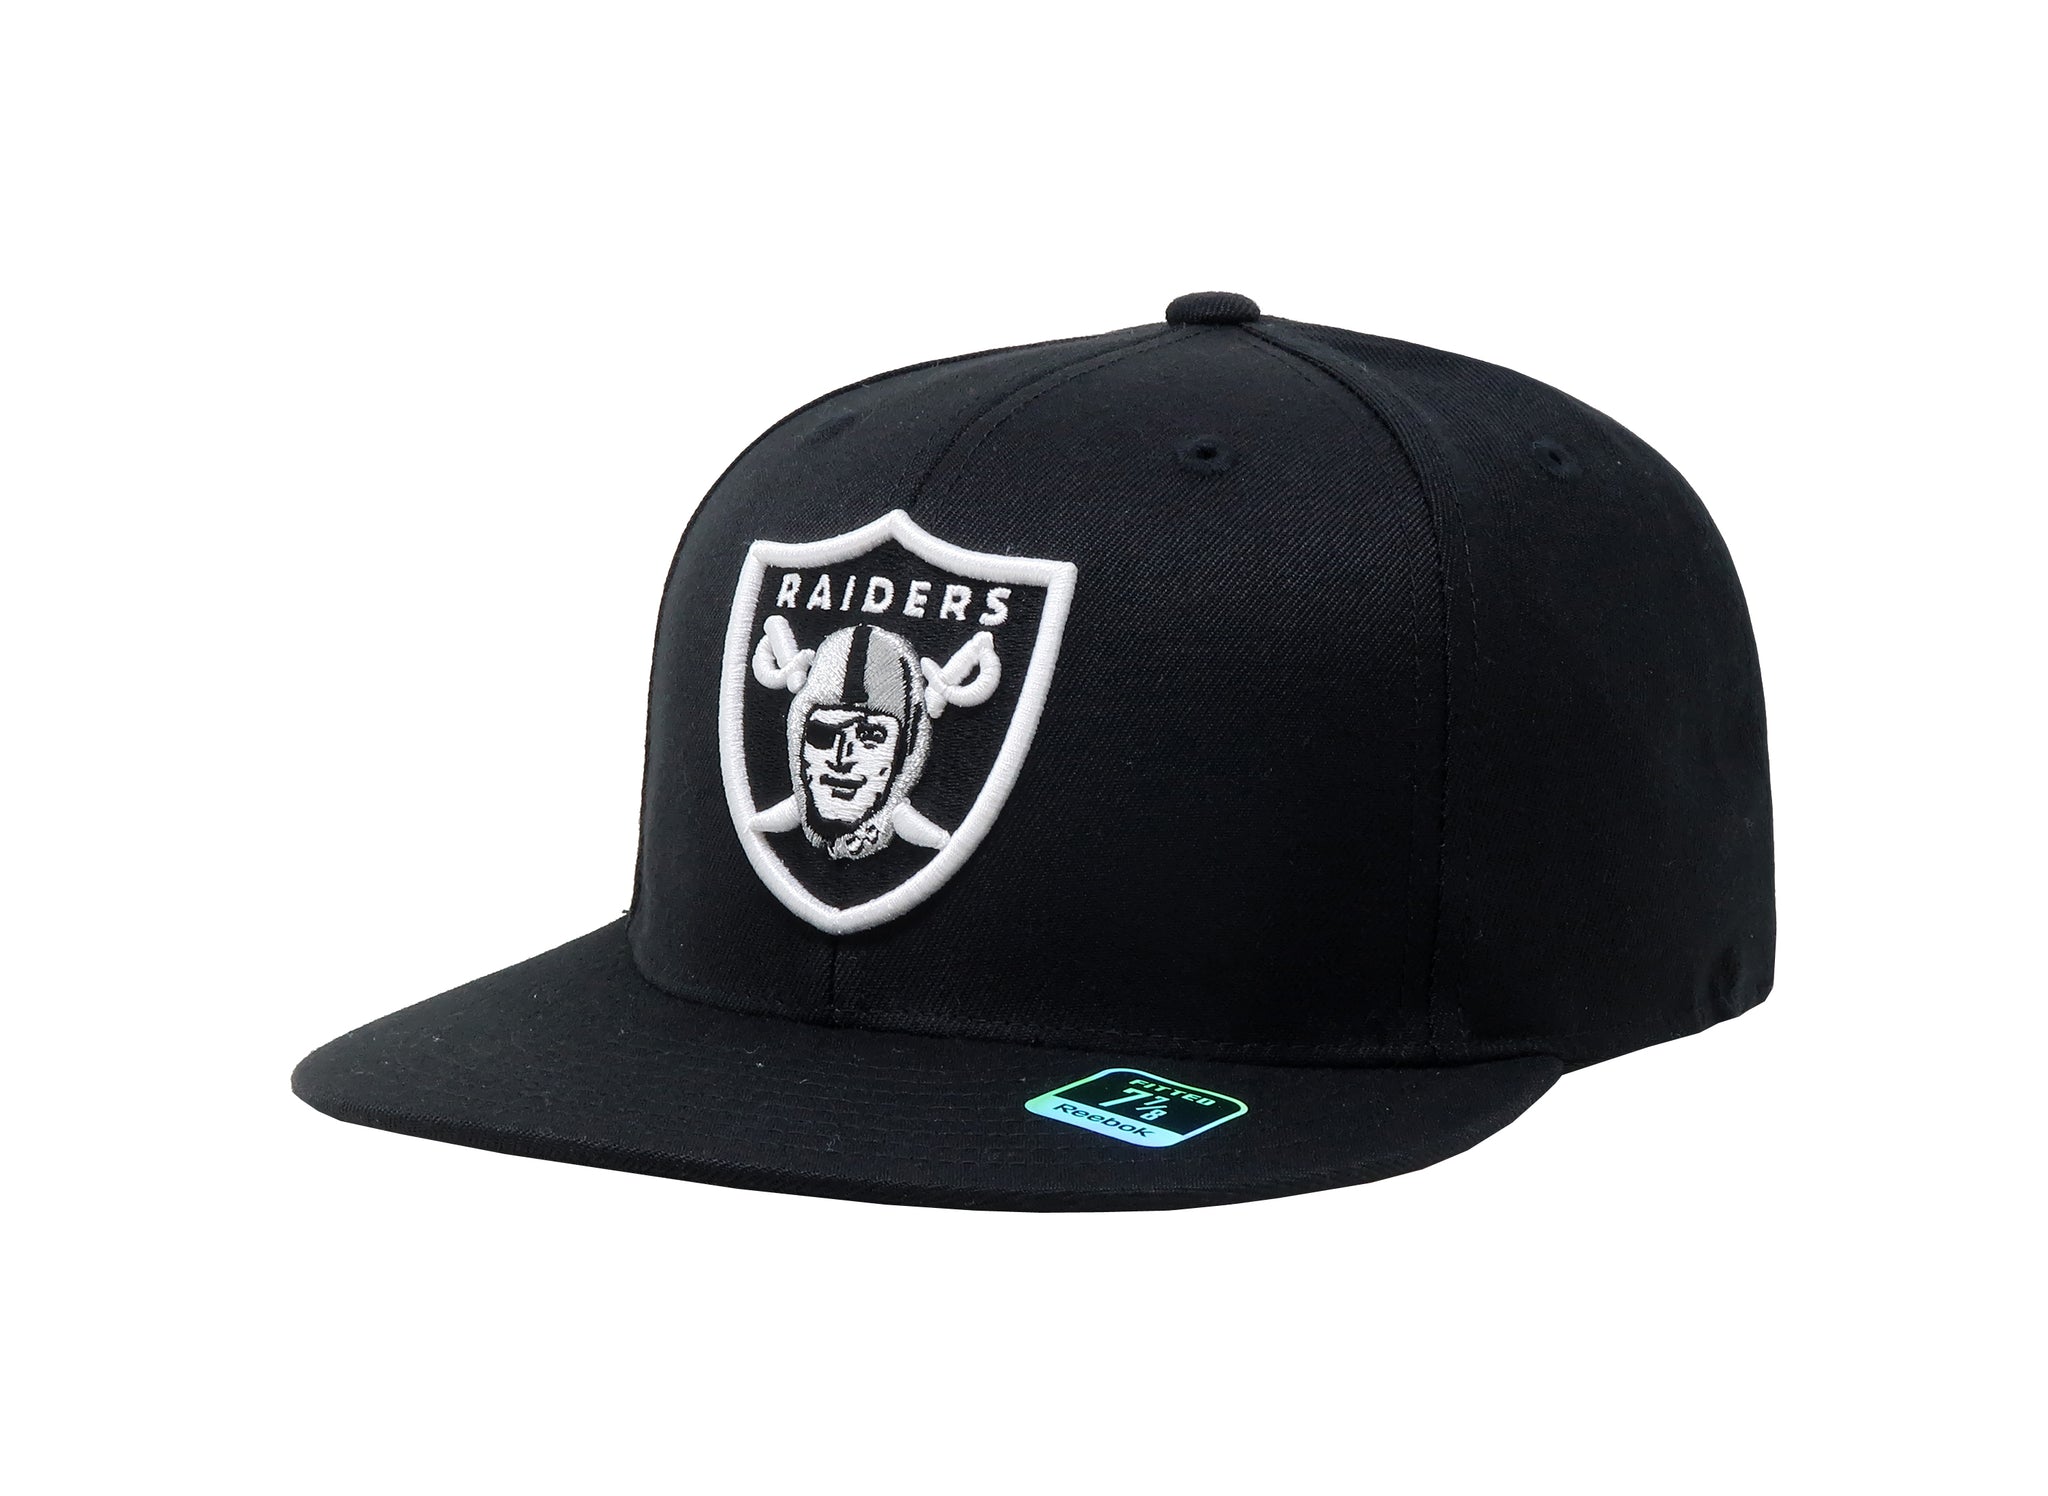 Reebok Men's Cap Oakland Raiders Black Fitted Flat Brim Hat